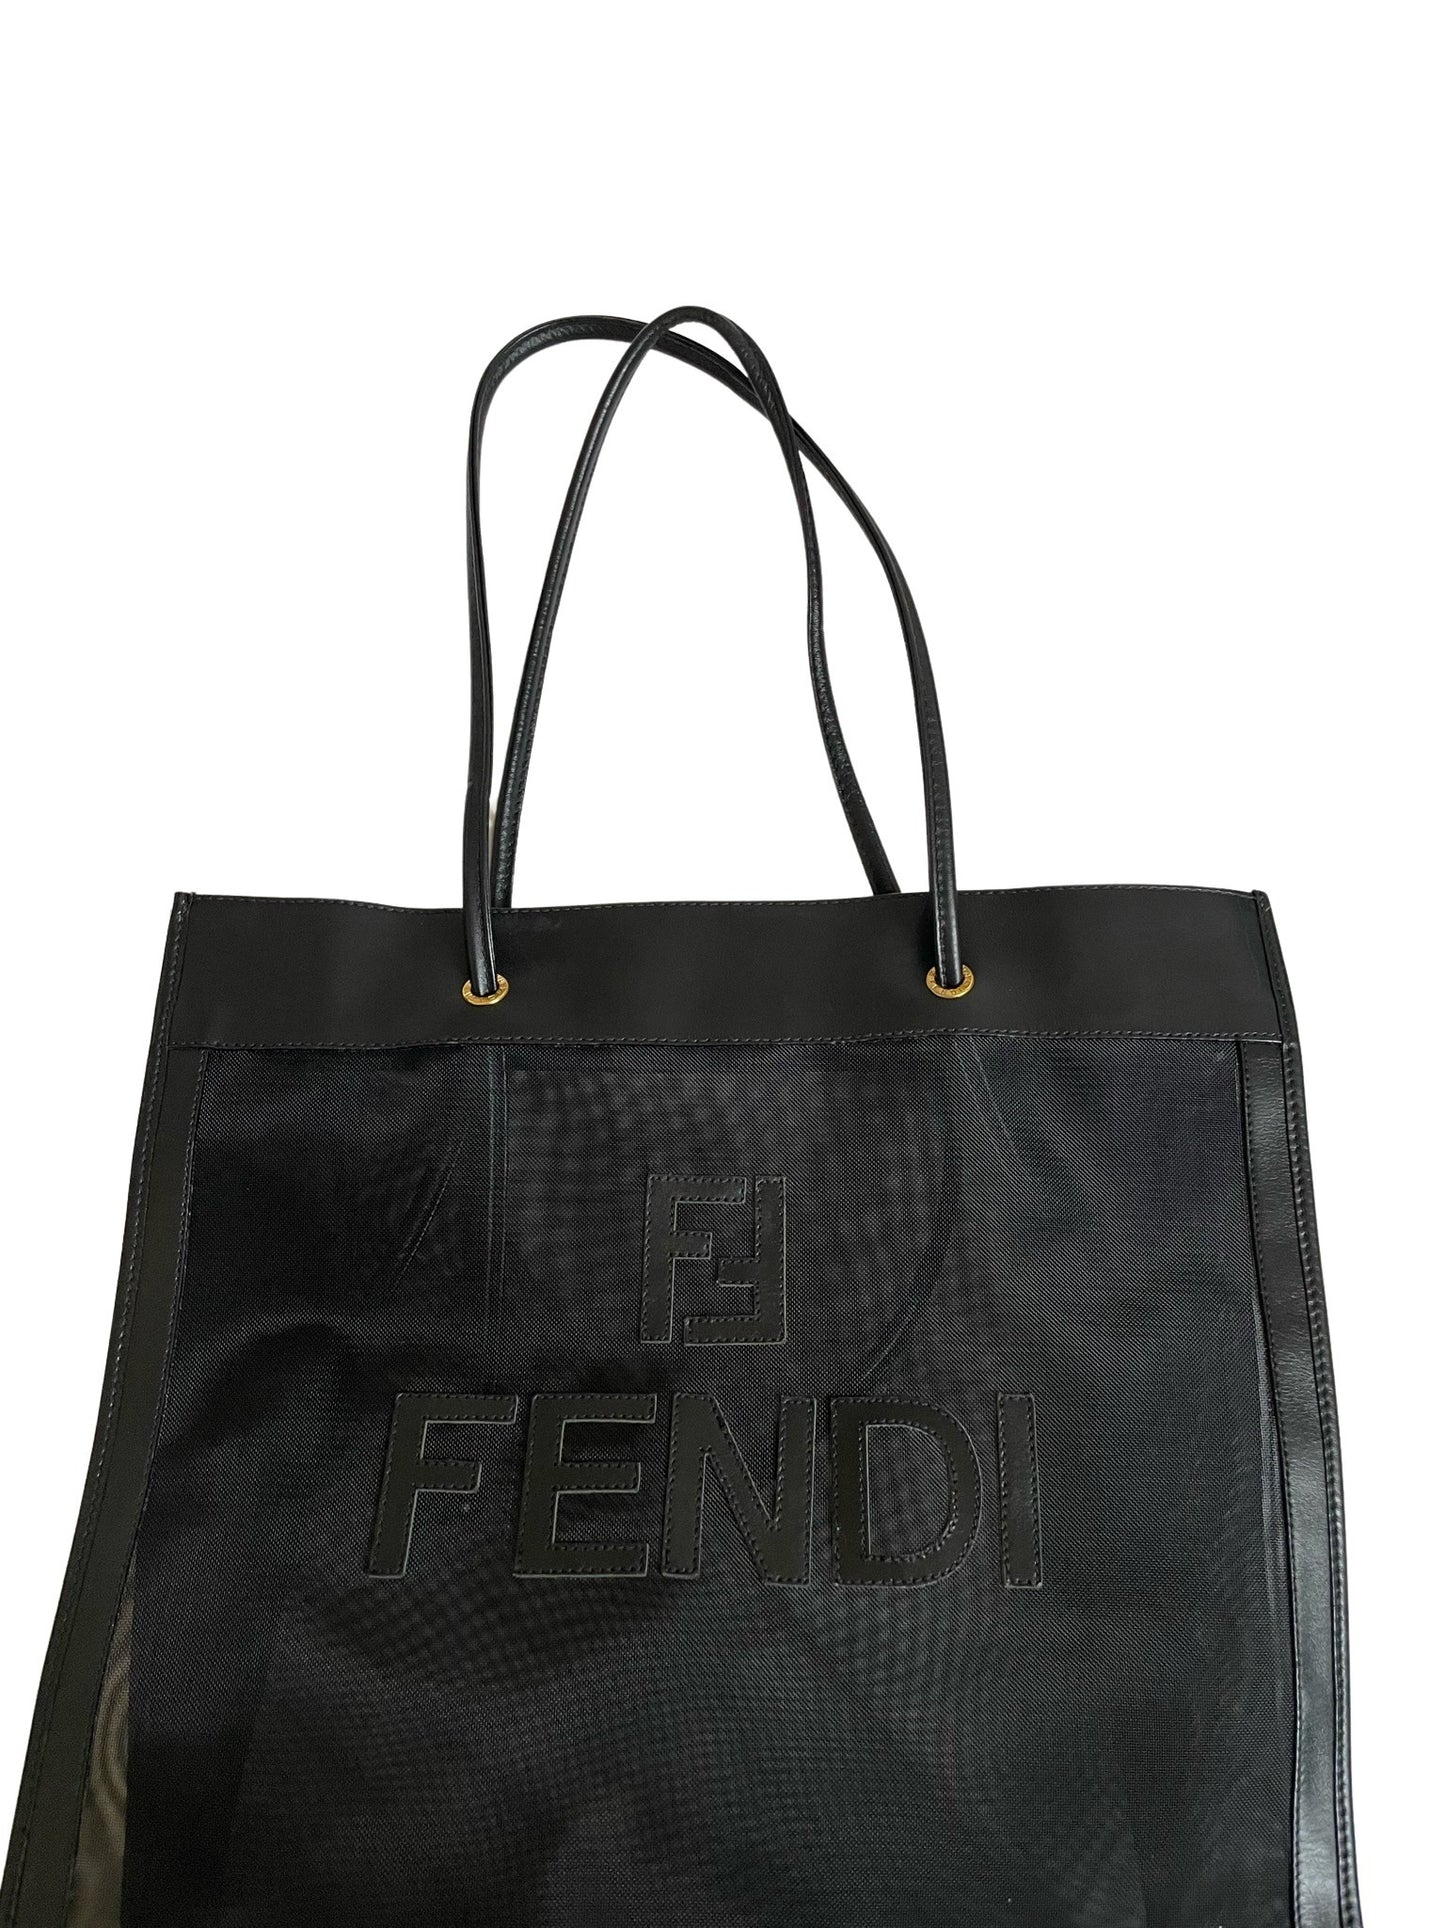 Fendi Black Leather Fiber Tote Bag